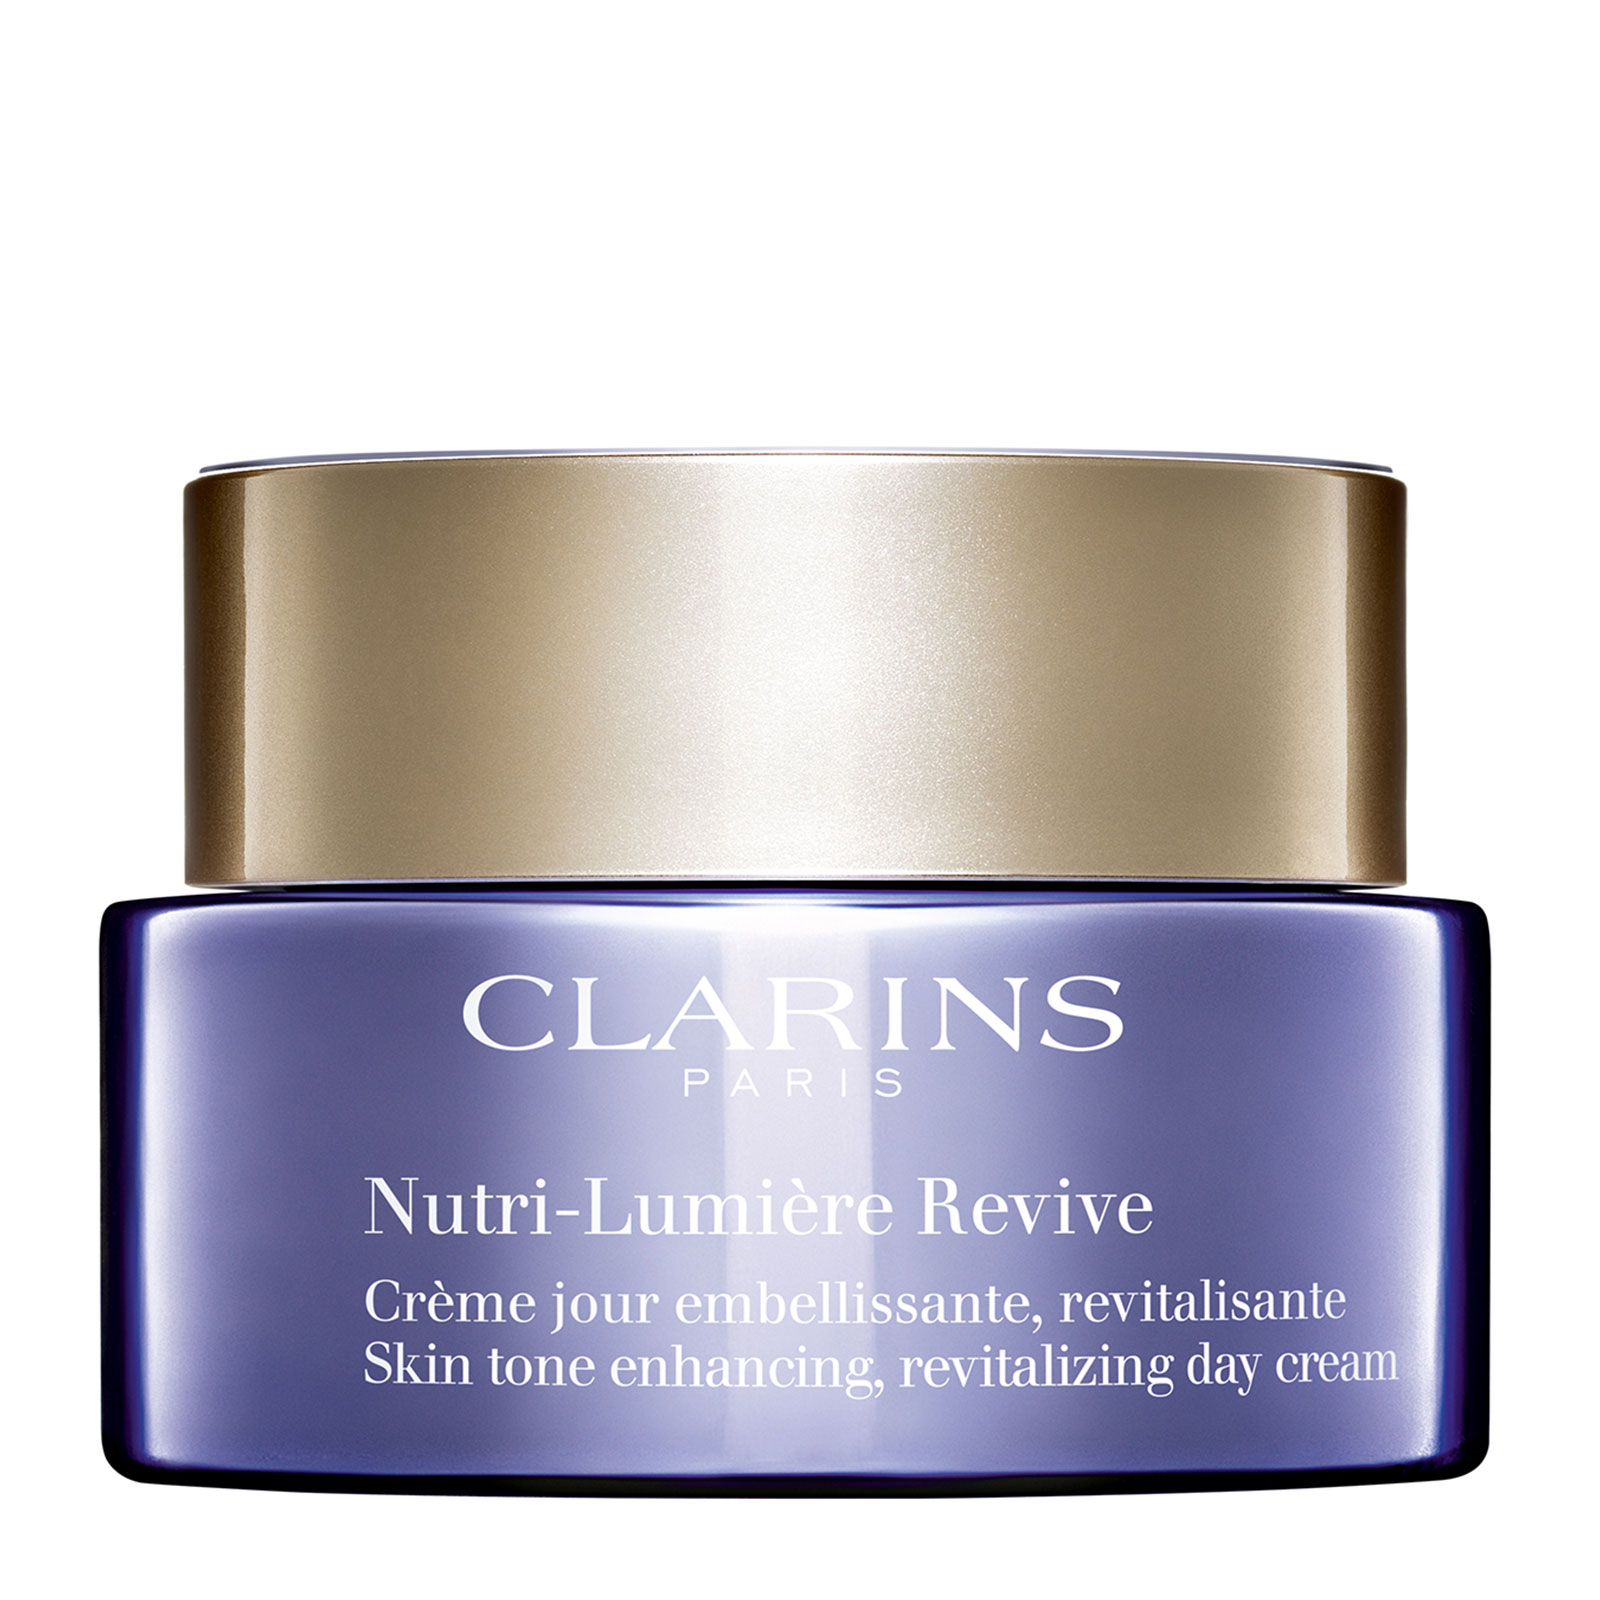 Clarins Nutri Luminere Revive 50ml